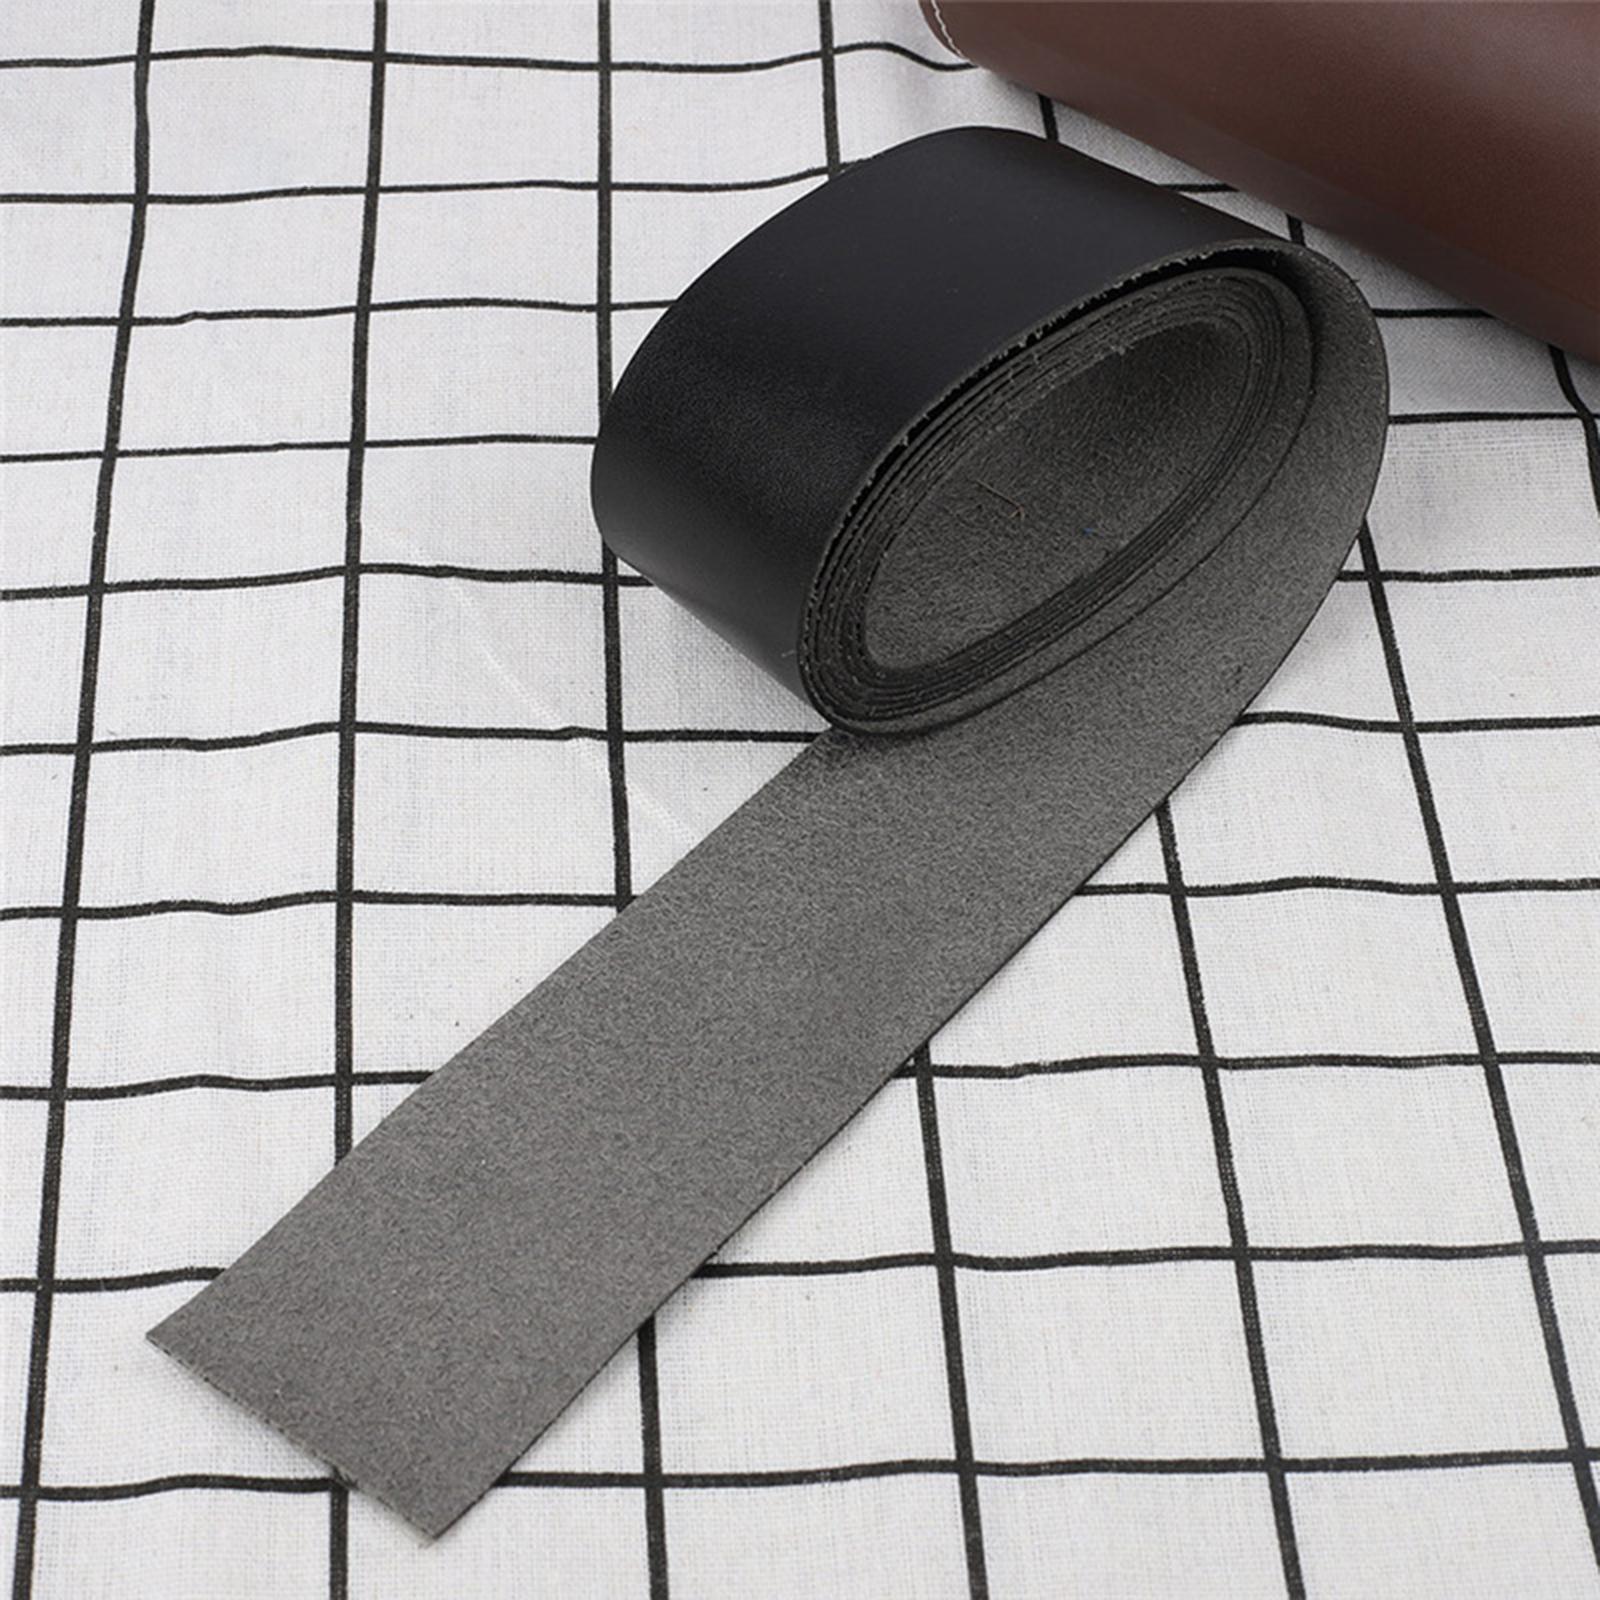 2m Leather Strap Strips Bag Belt Leathercraft Projects Pet Collars Garment Black